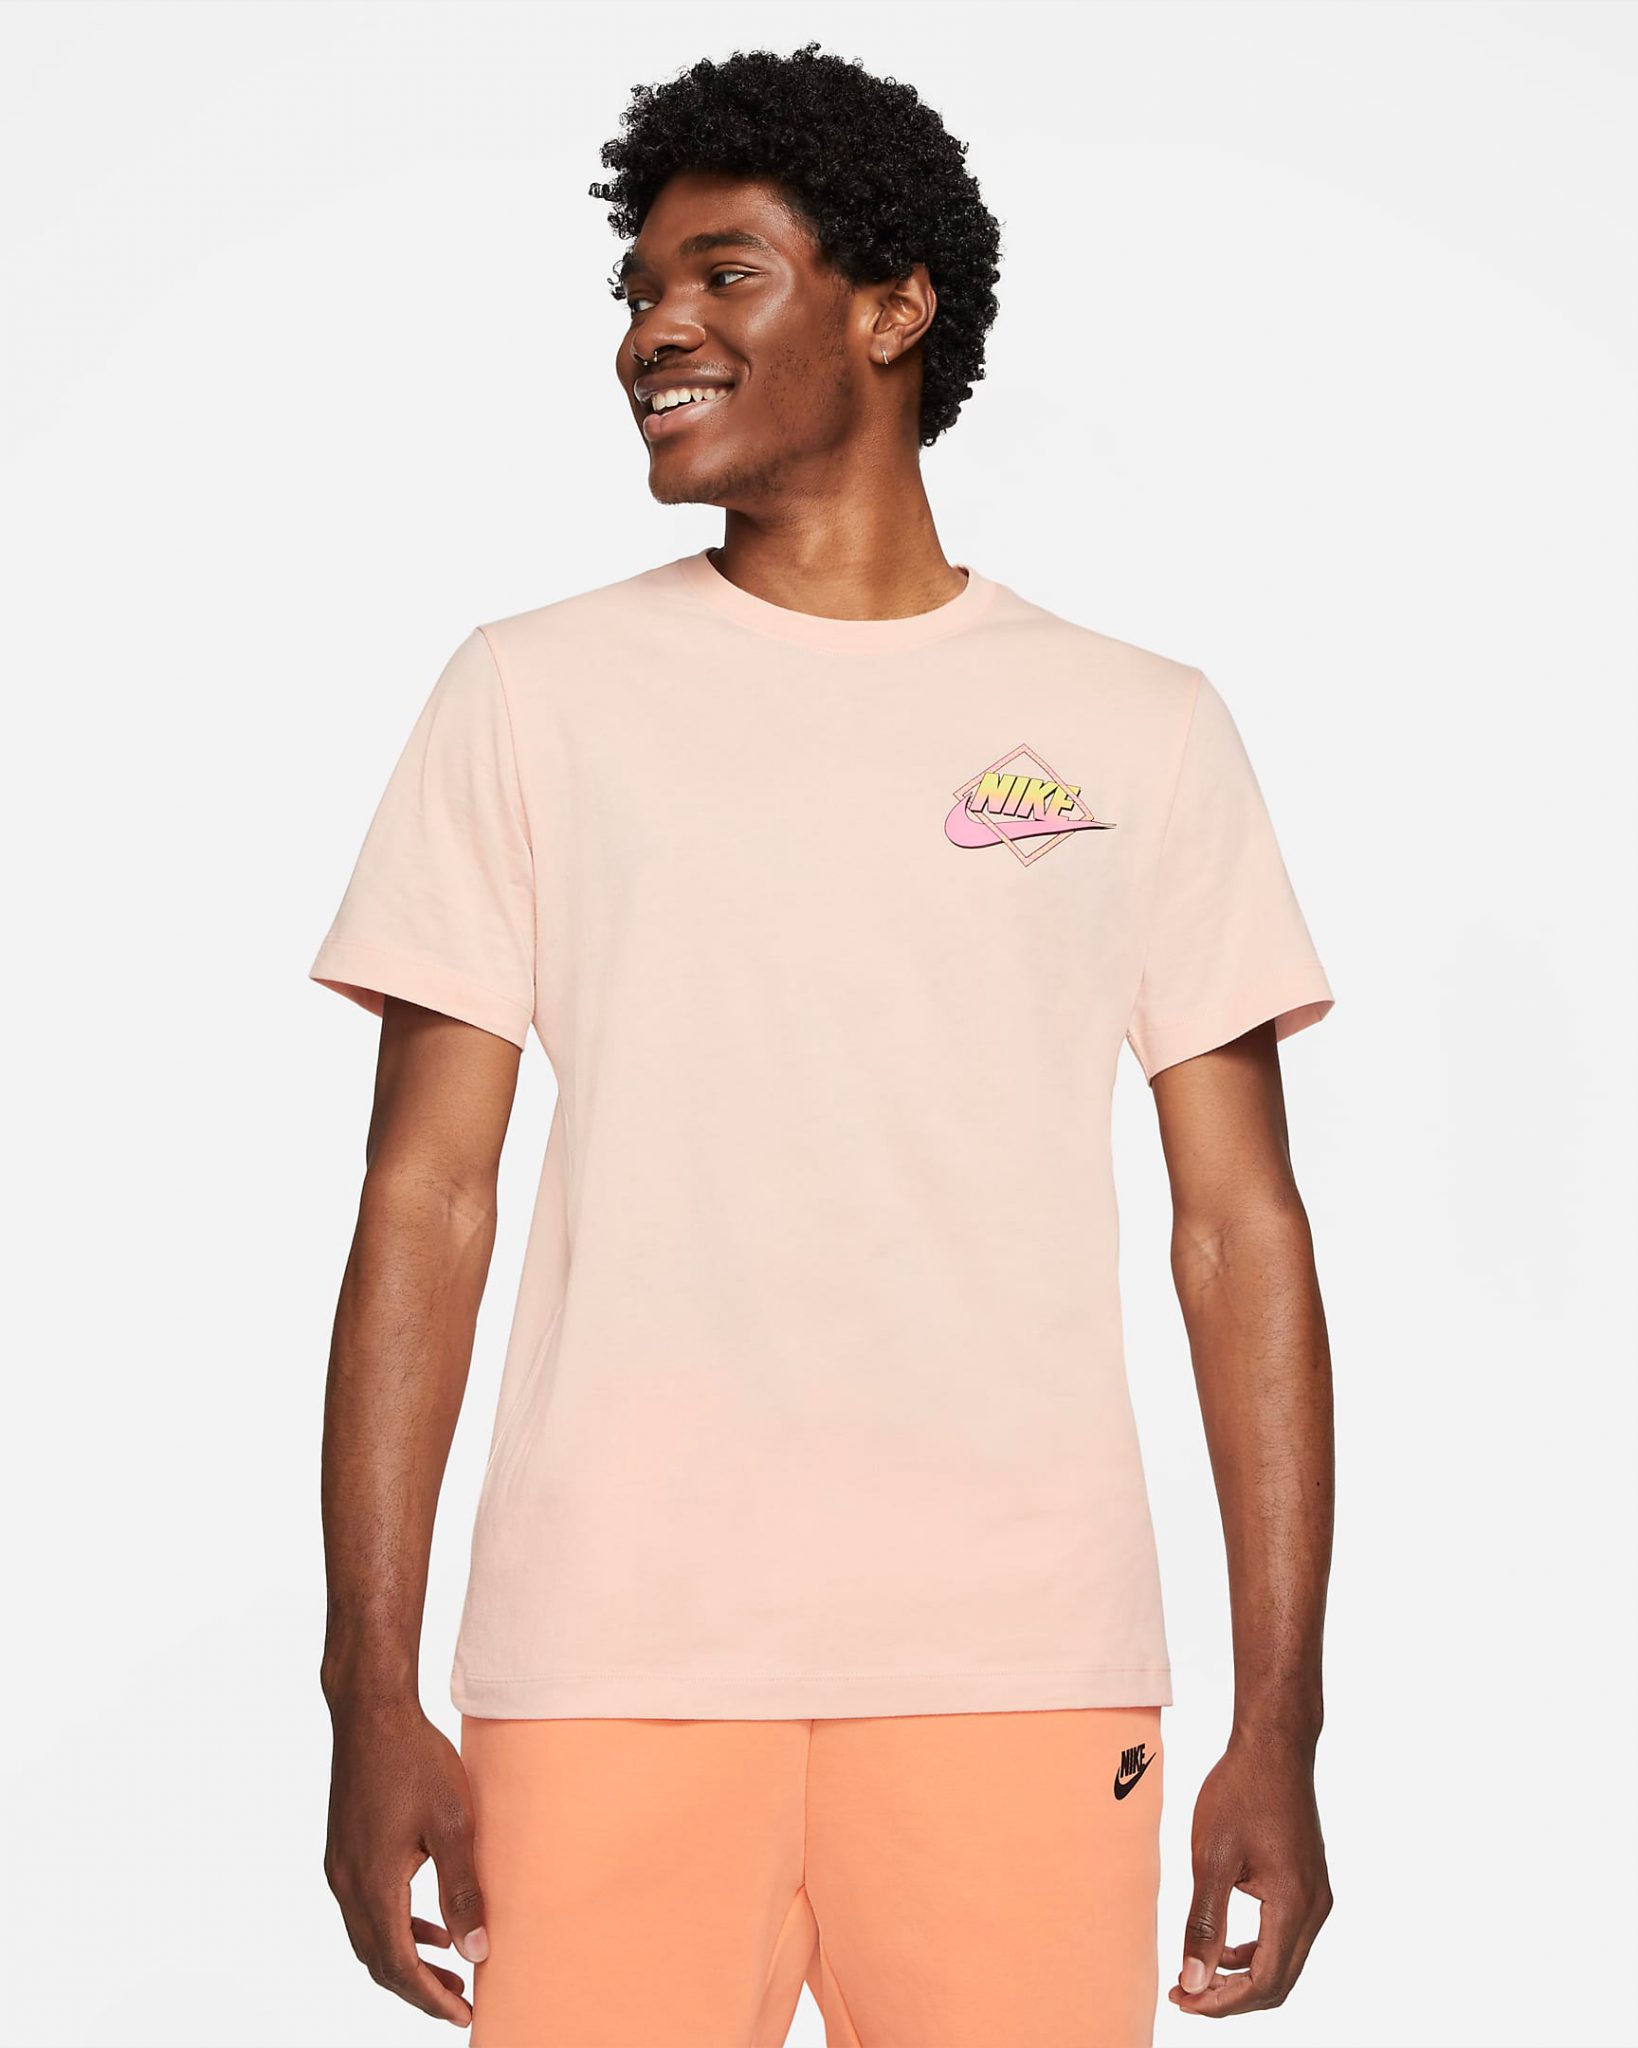 Nike Arctic Orange Clothing Shirts Sneaker Outfits